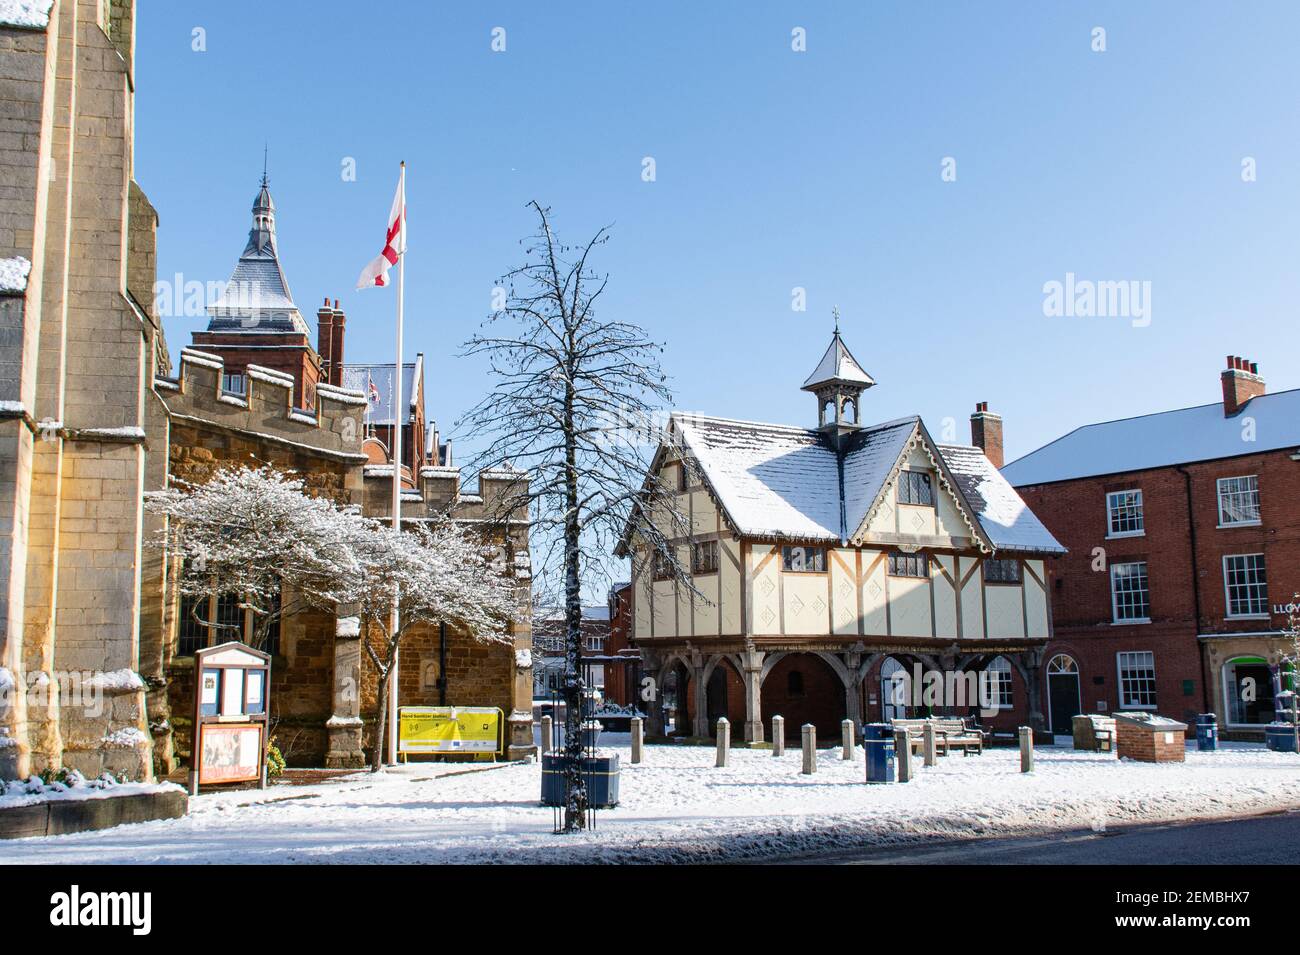 Market Harborough Grammar School in snow Stock Photo